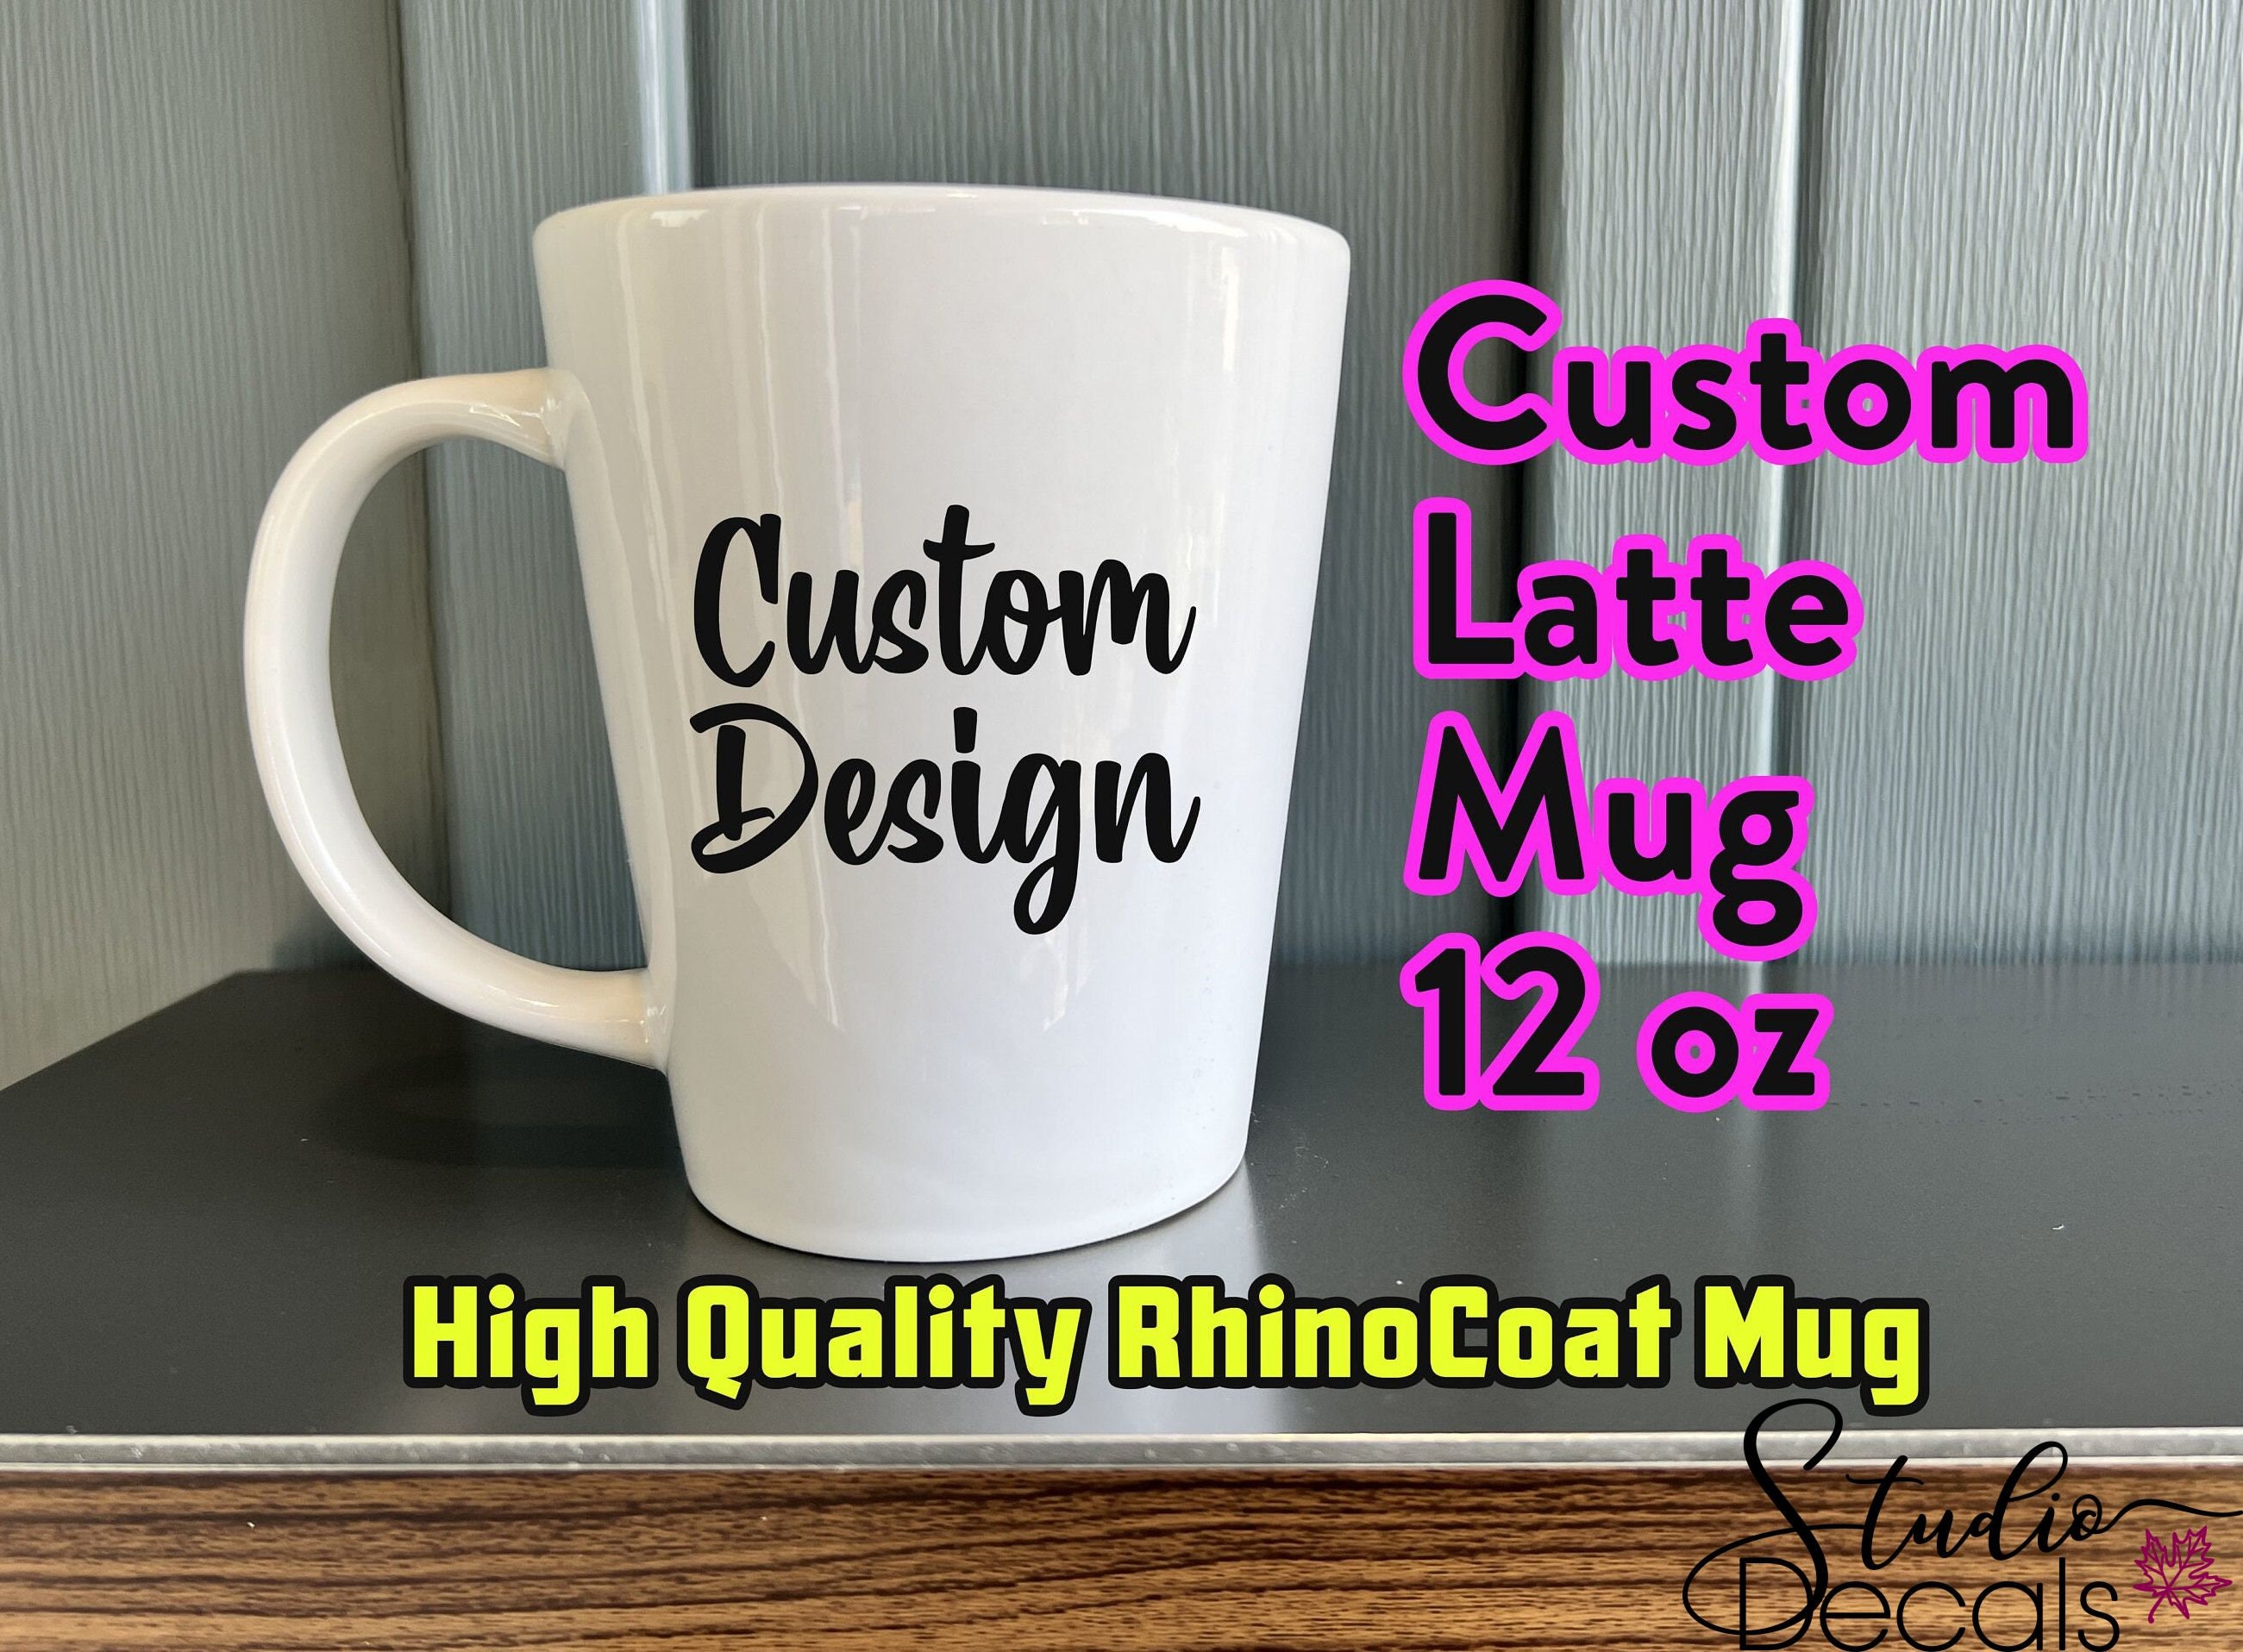 12 oz. Latte Mug - Item #MC1200 -  Custom Printed  Promotional Products